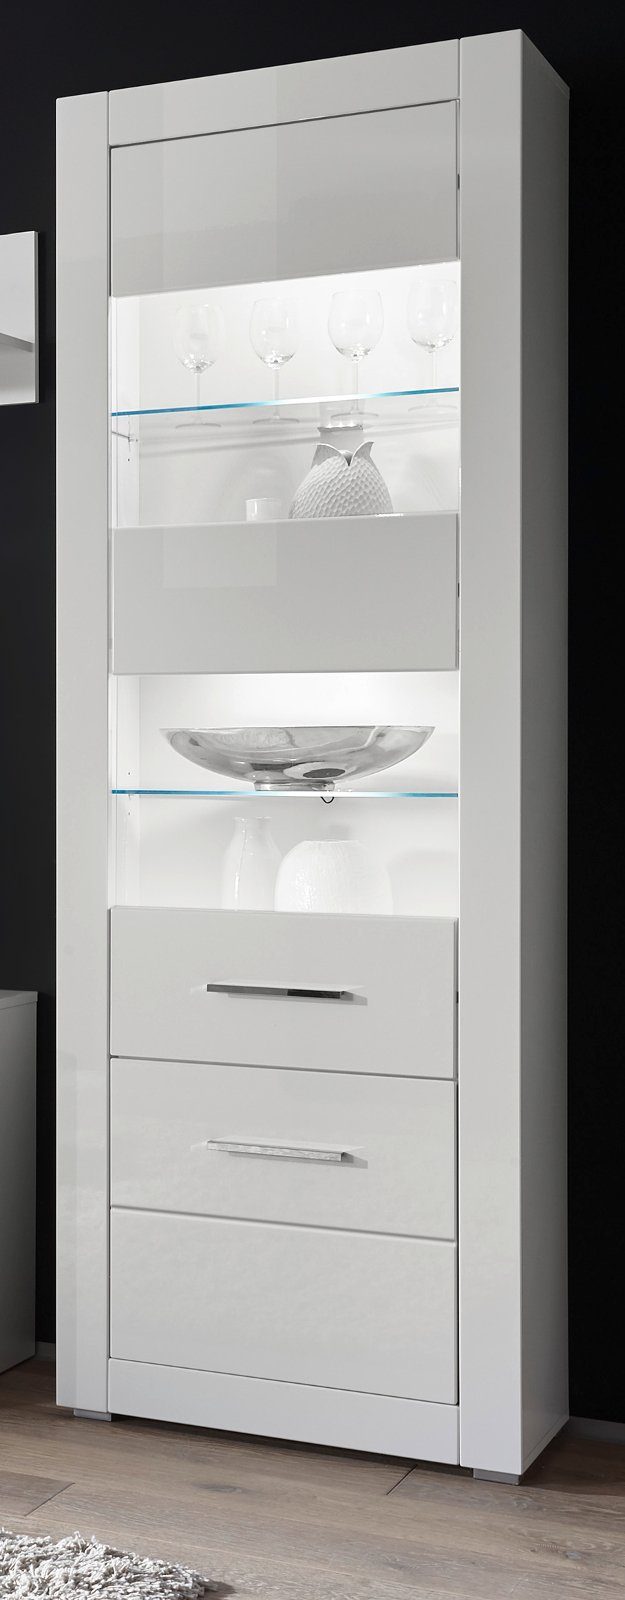 Furn.Design Stauraumvitrine Carrara in x weiß, 198 Hochglanz 65 cm) 2-türig, (Standvitrine